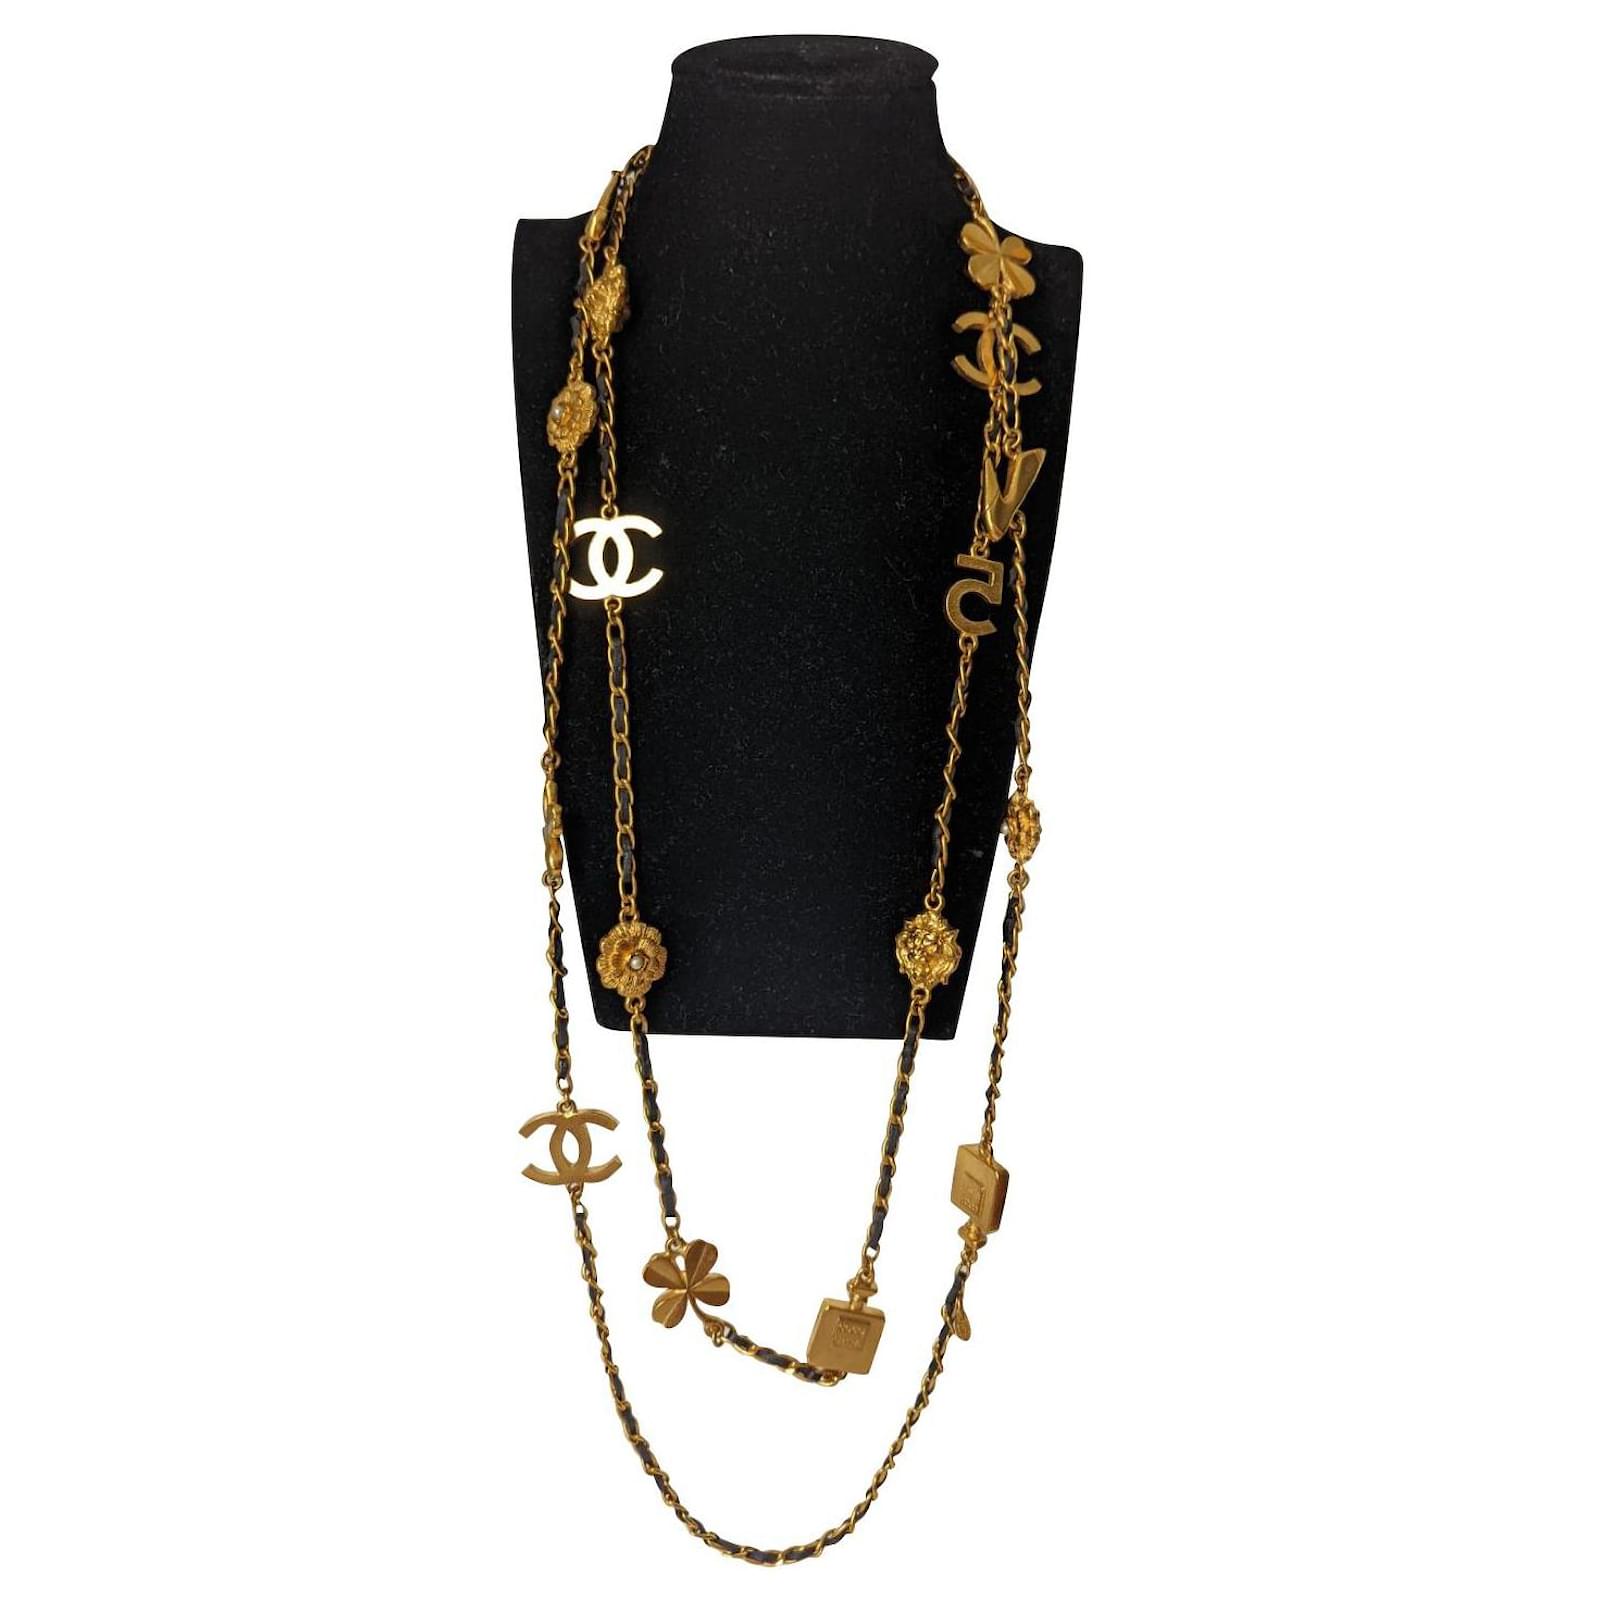 Chanel Charm Bracelet!